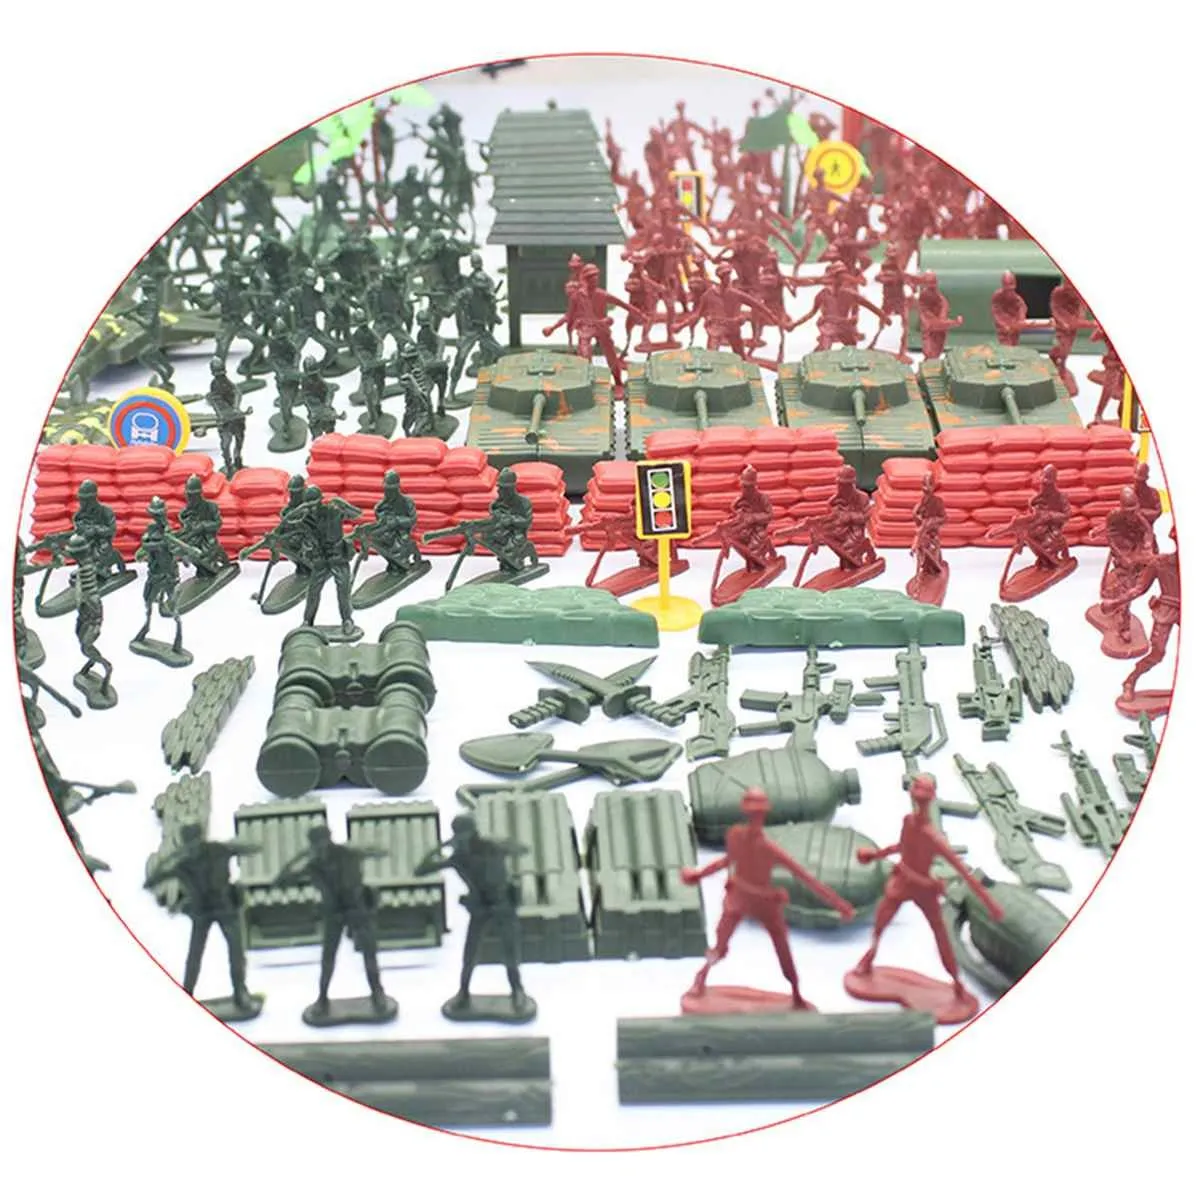 Kids /مجموعة من البلاستيك العسكرية العسكرية نموذج العزلة قاعدة الجيش قاعدة الاكسنة ديكور الهدية ألعاب 7323174